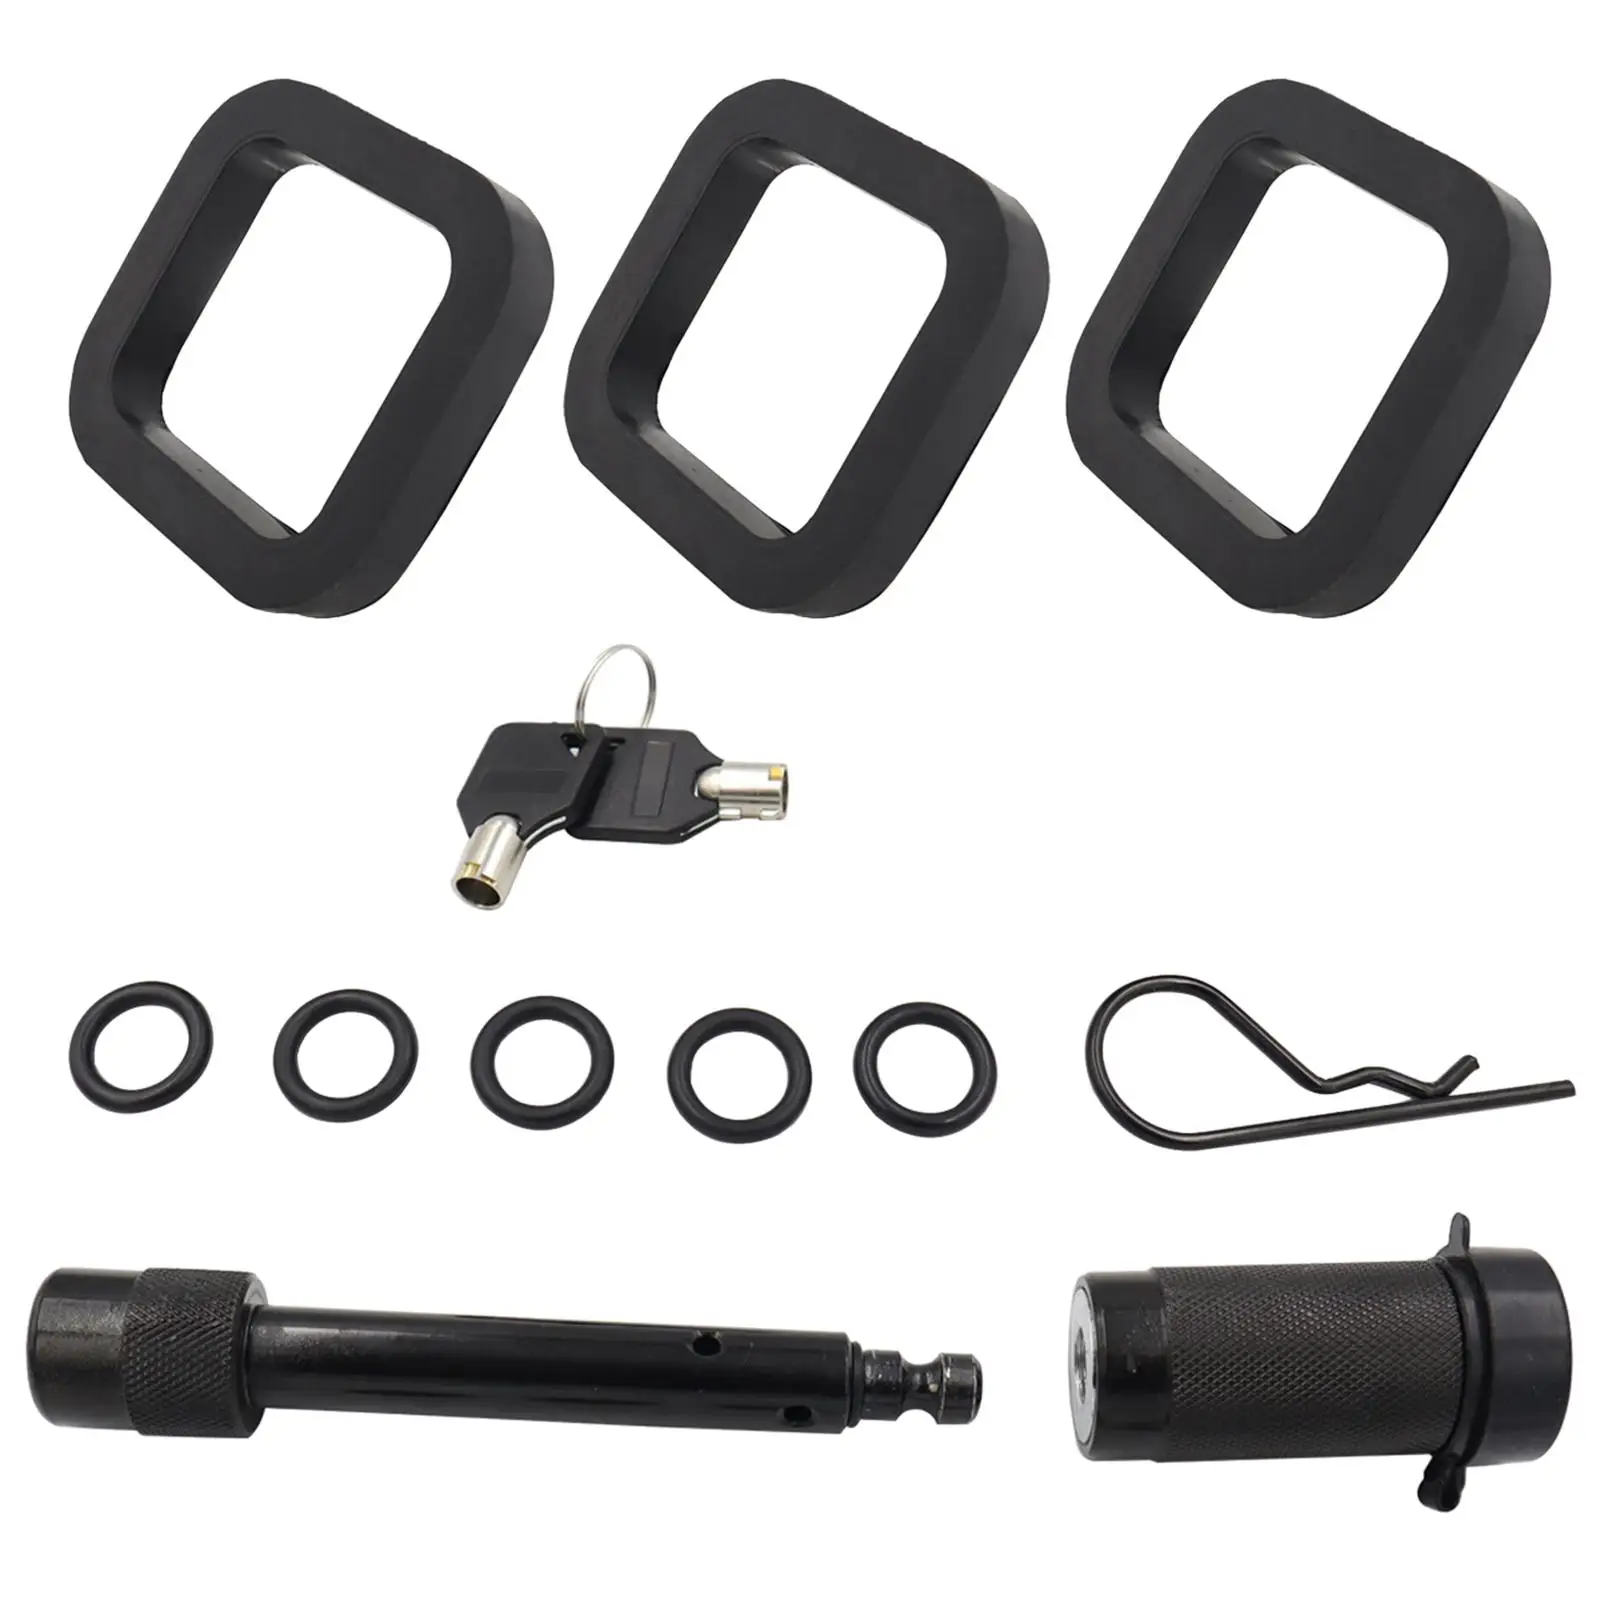 5/8 Inches Trailer Hitch Locks Kit Premium Material Universal ,Black Durable